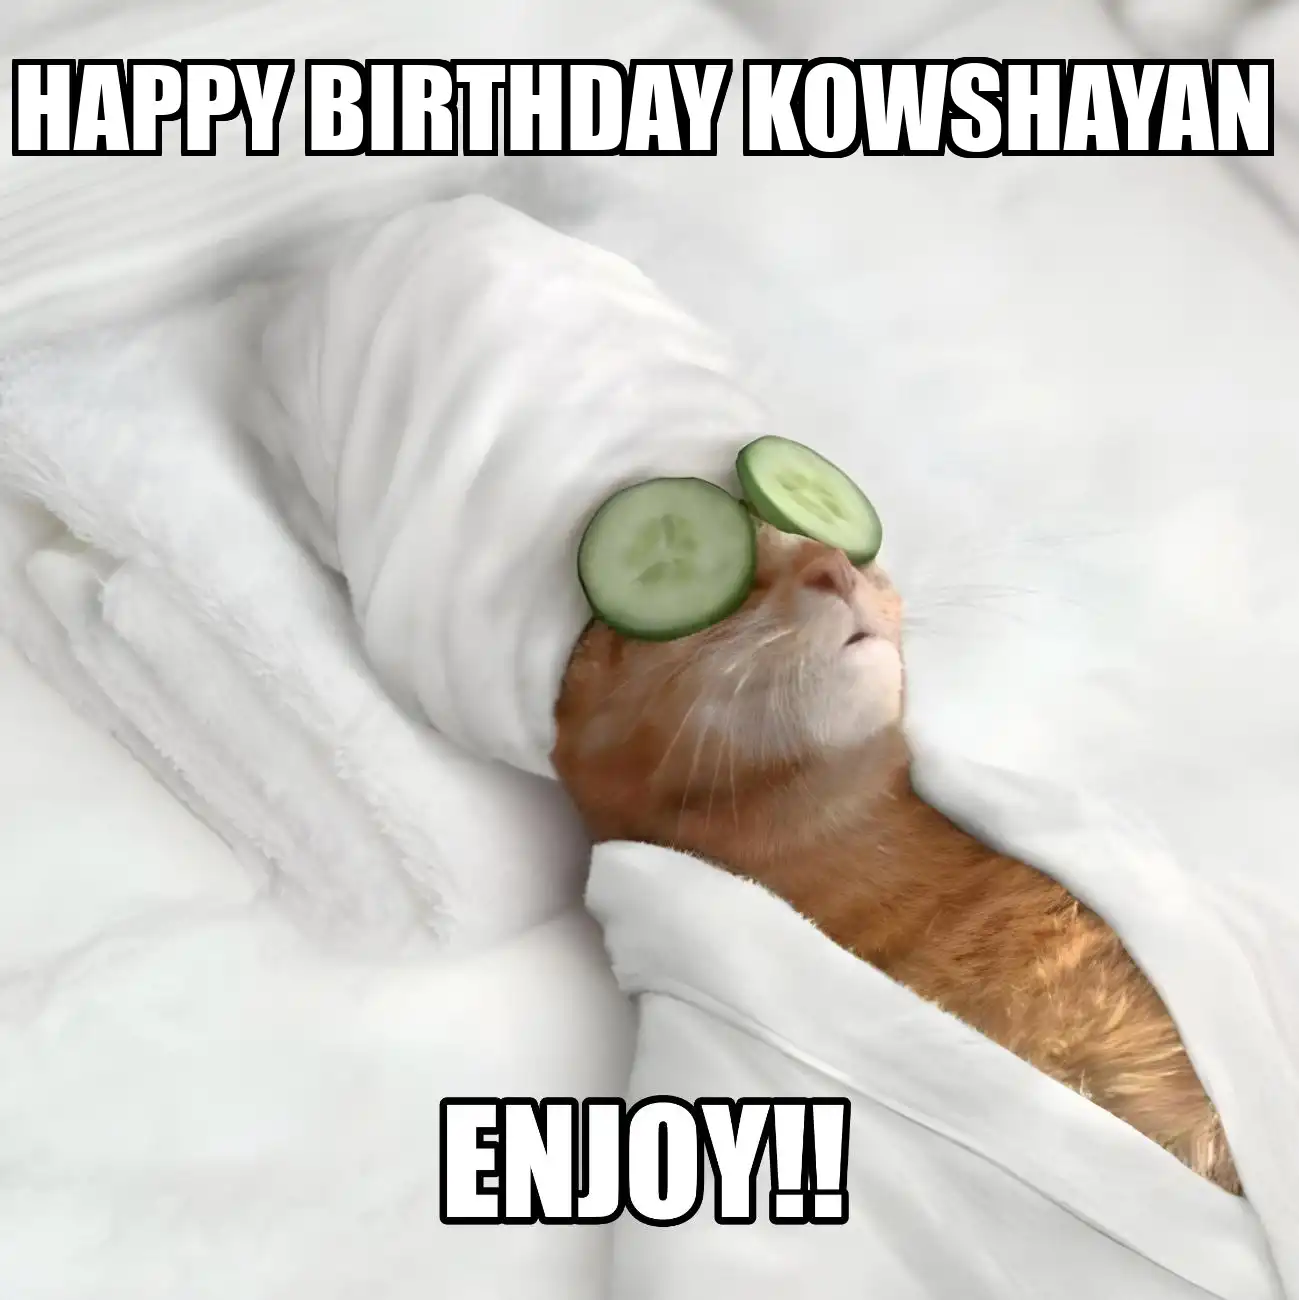 Happy Birthday Kowshayan Enjoy Cat Meme